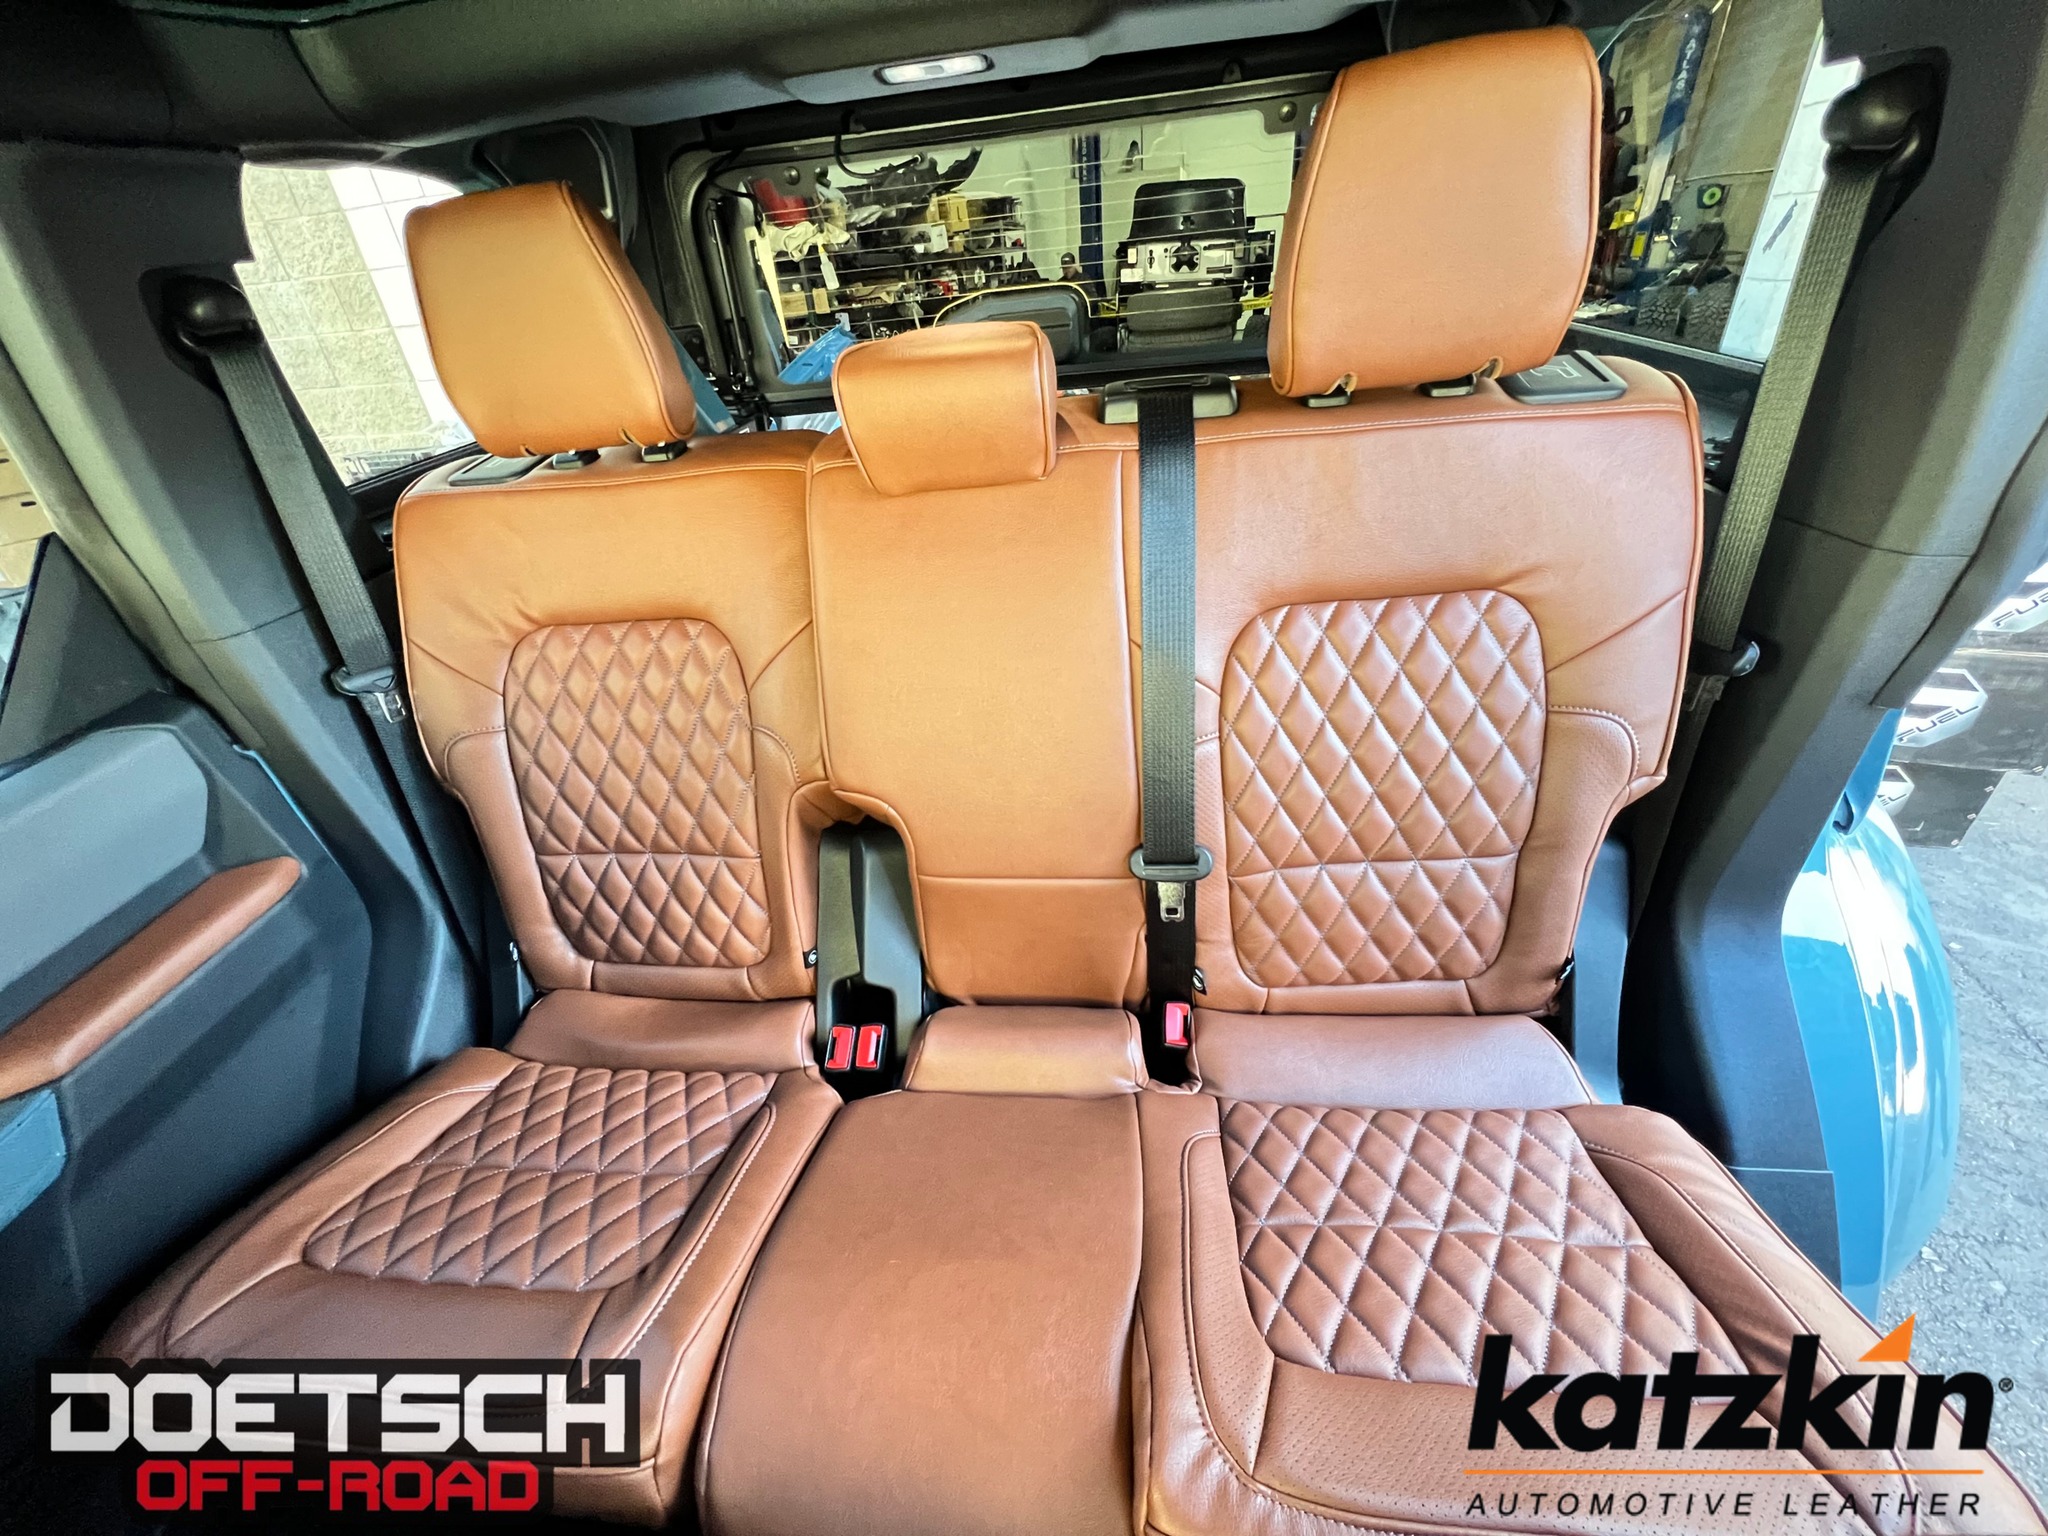 Authorized Katzkin Automotive Leather Dealer